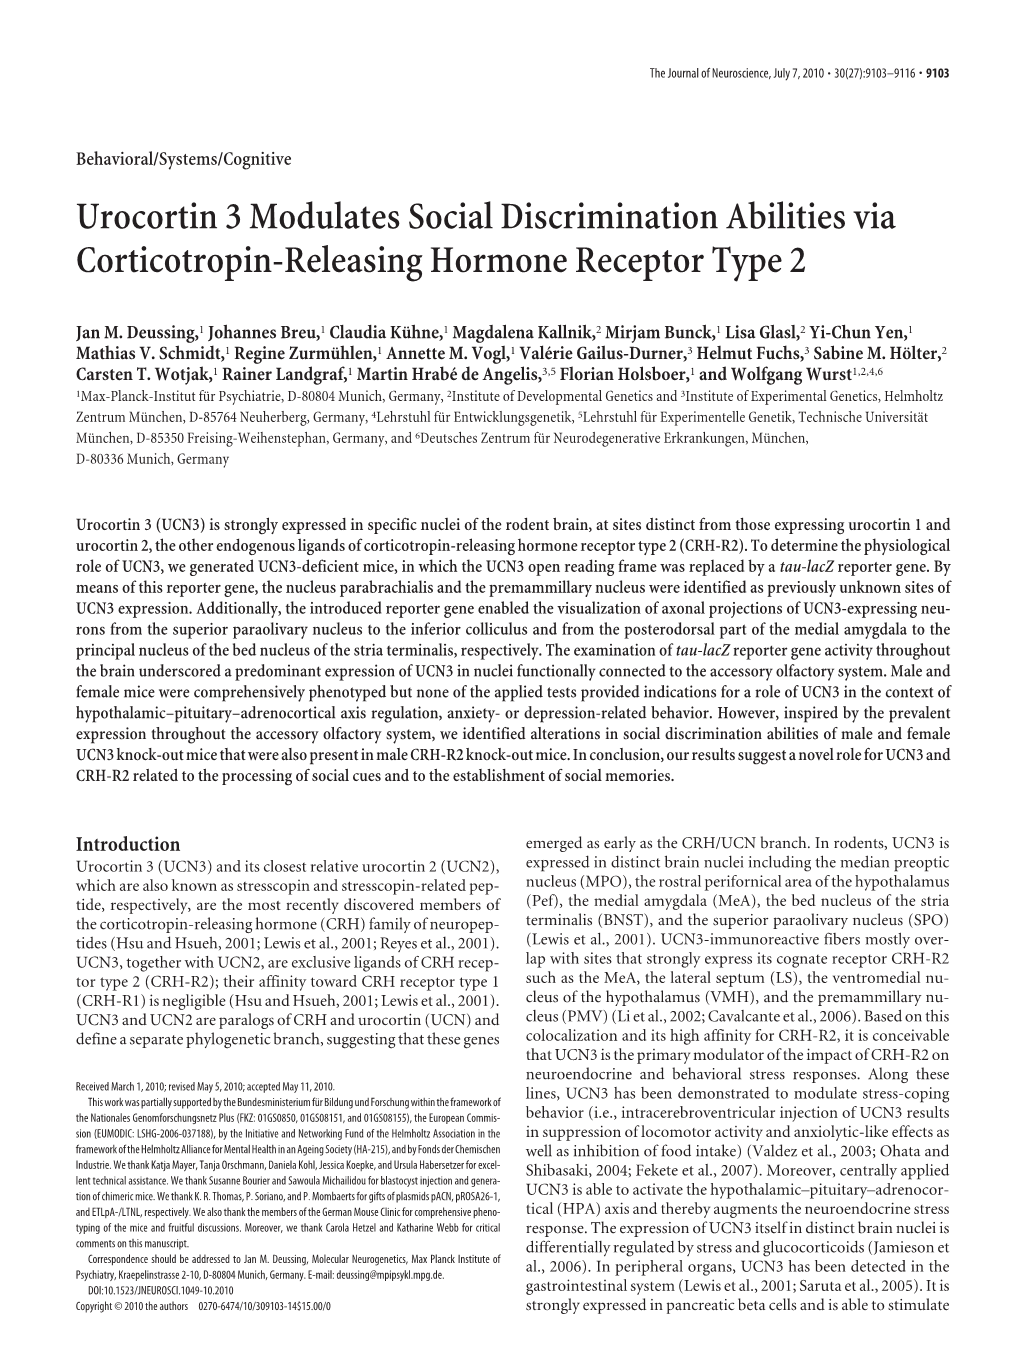 Urocortin 3 Modulates Social Discrimination Abilities Via Corticotropin-Releasing Hormone Receptor Type 2